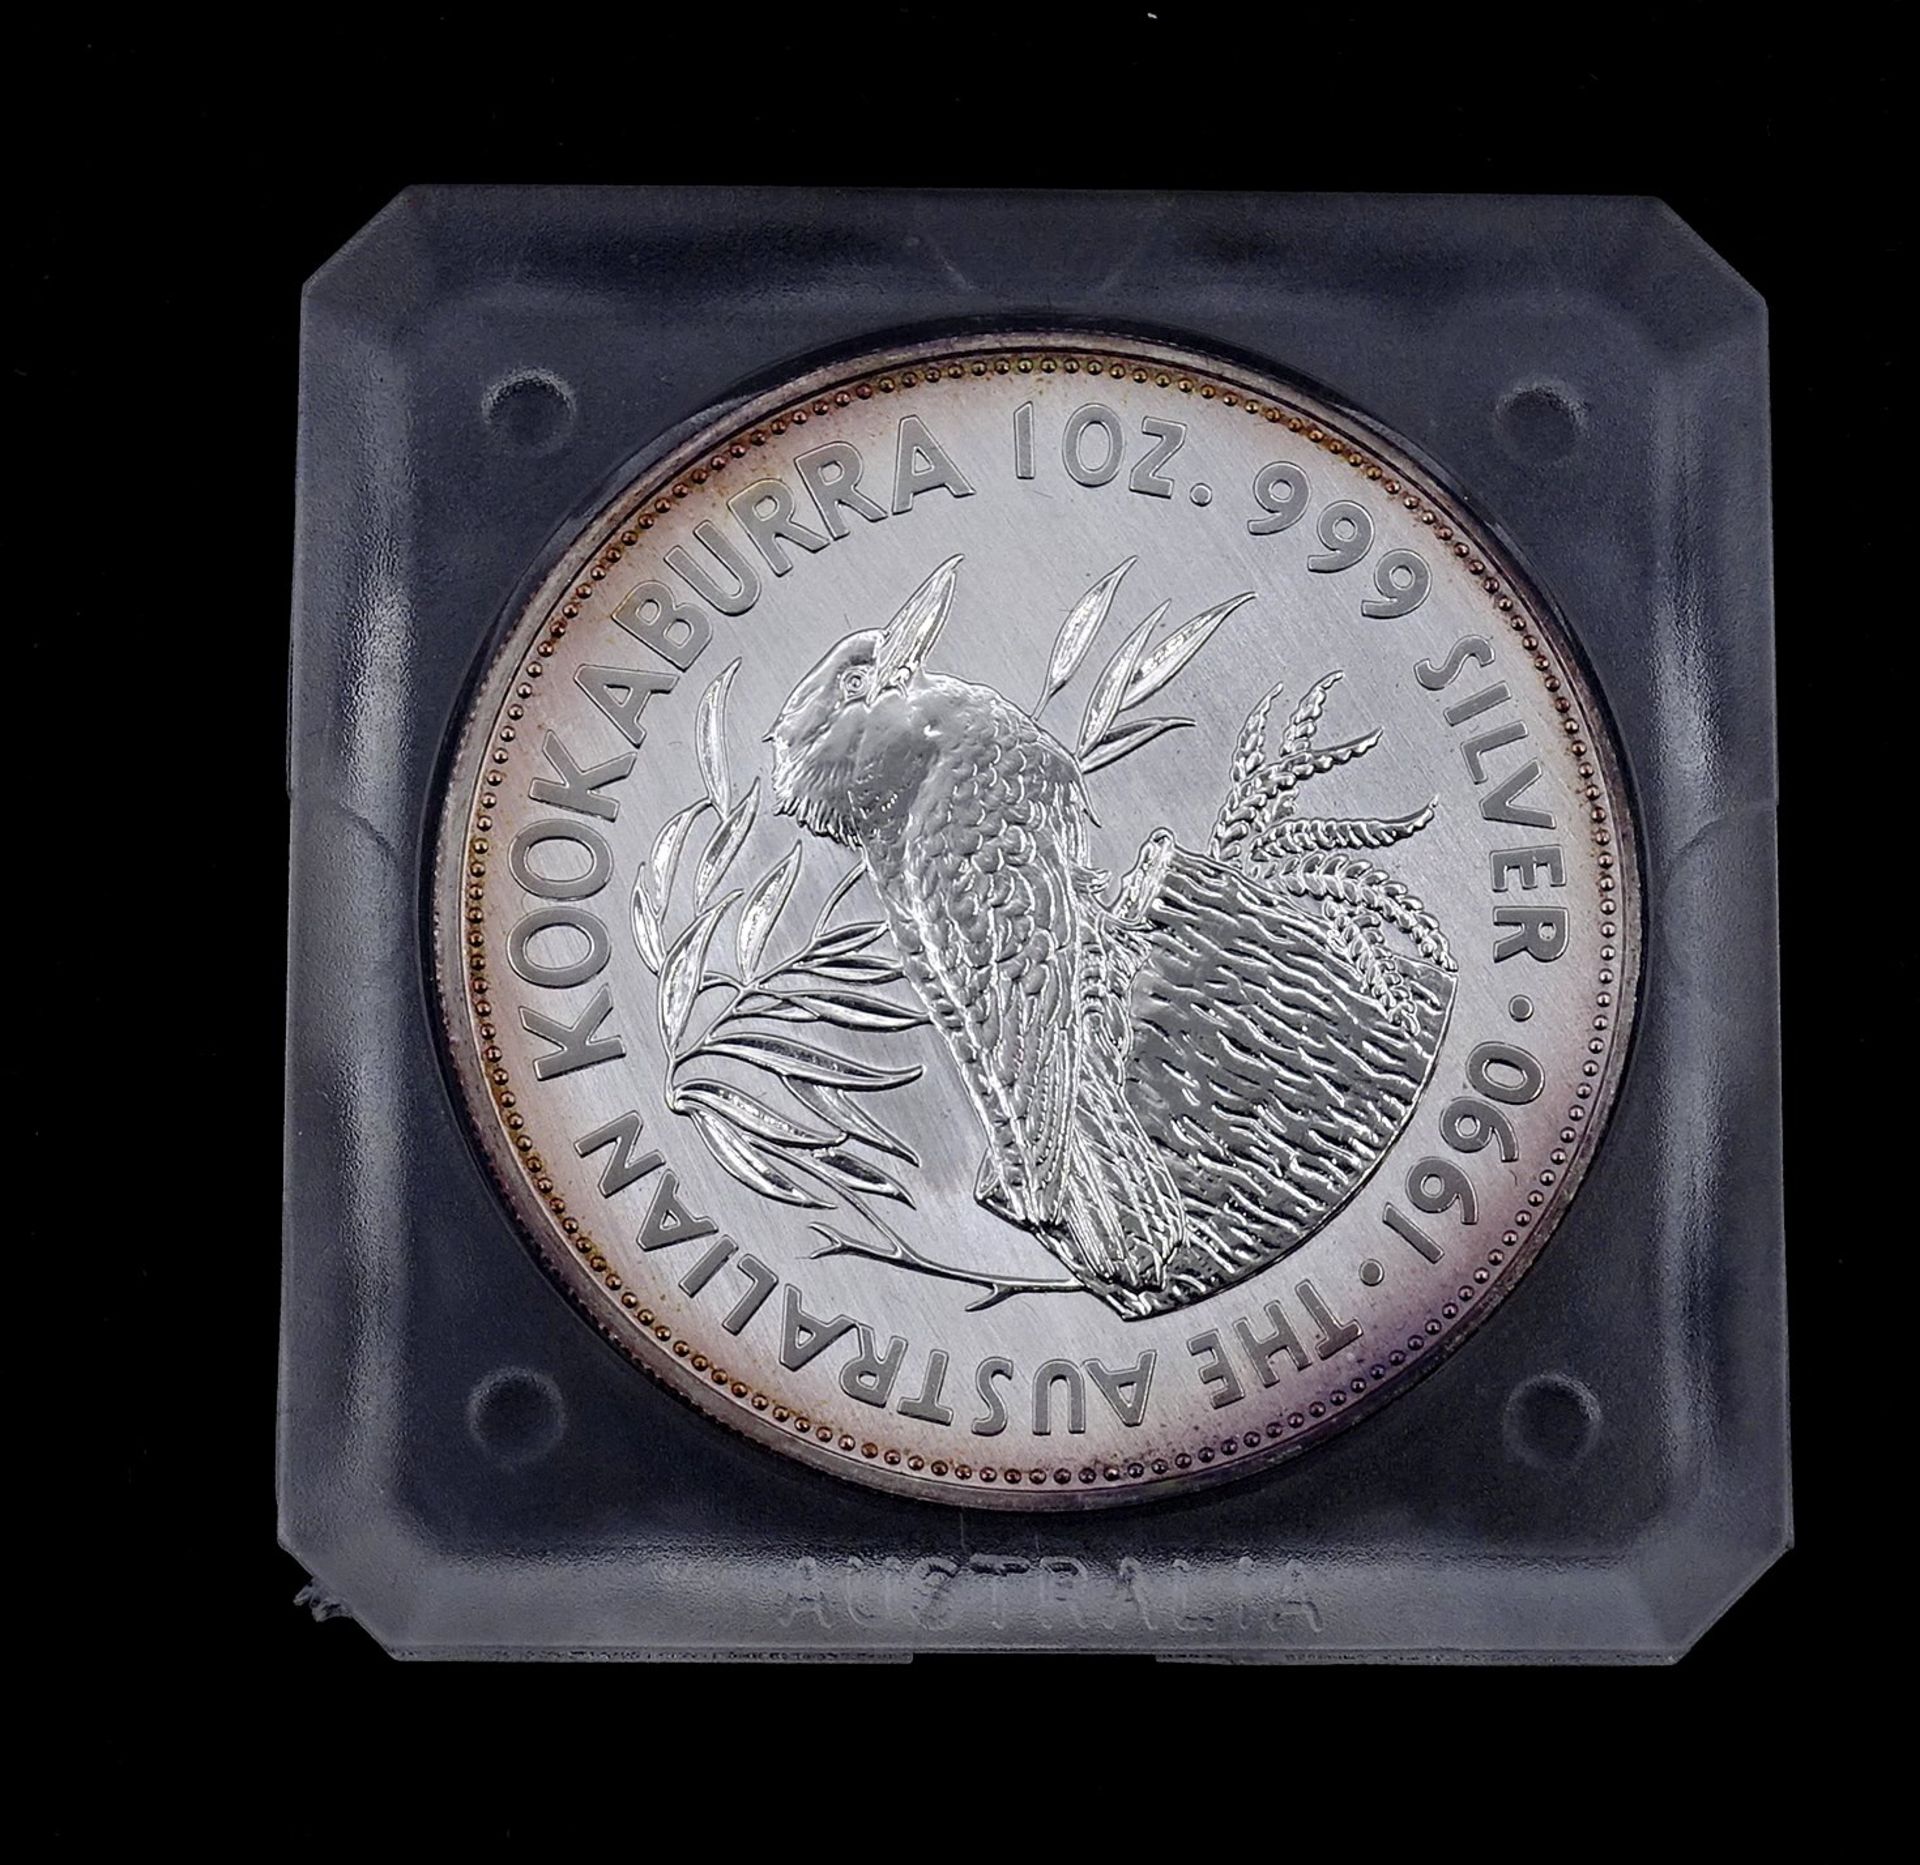 5 Dollars 1990 1 OZ Feinsilber 0.999 - The australian Kookaburra, gekapselt